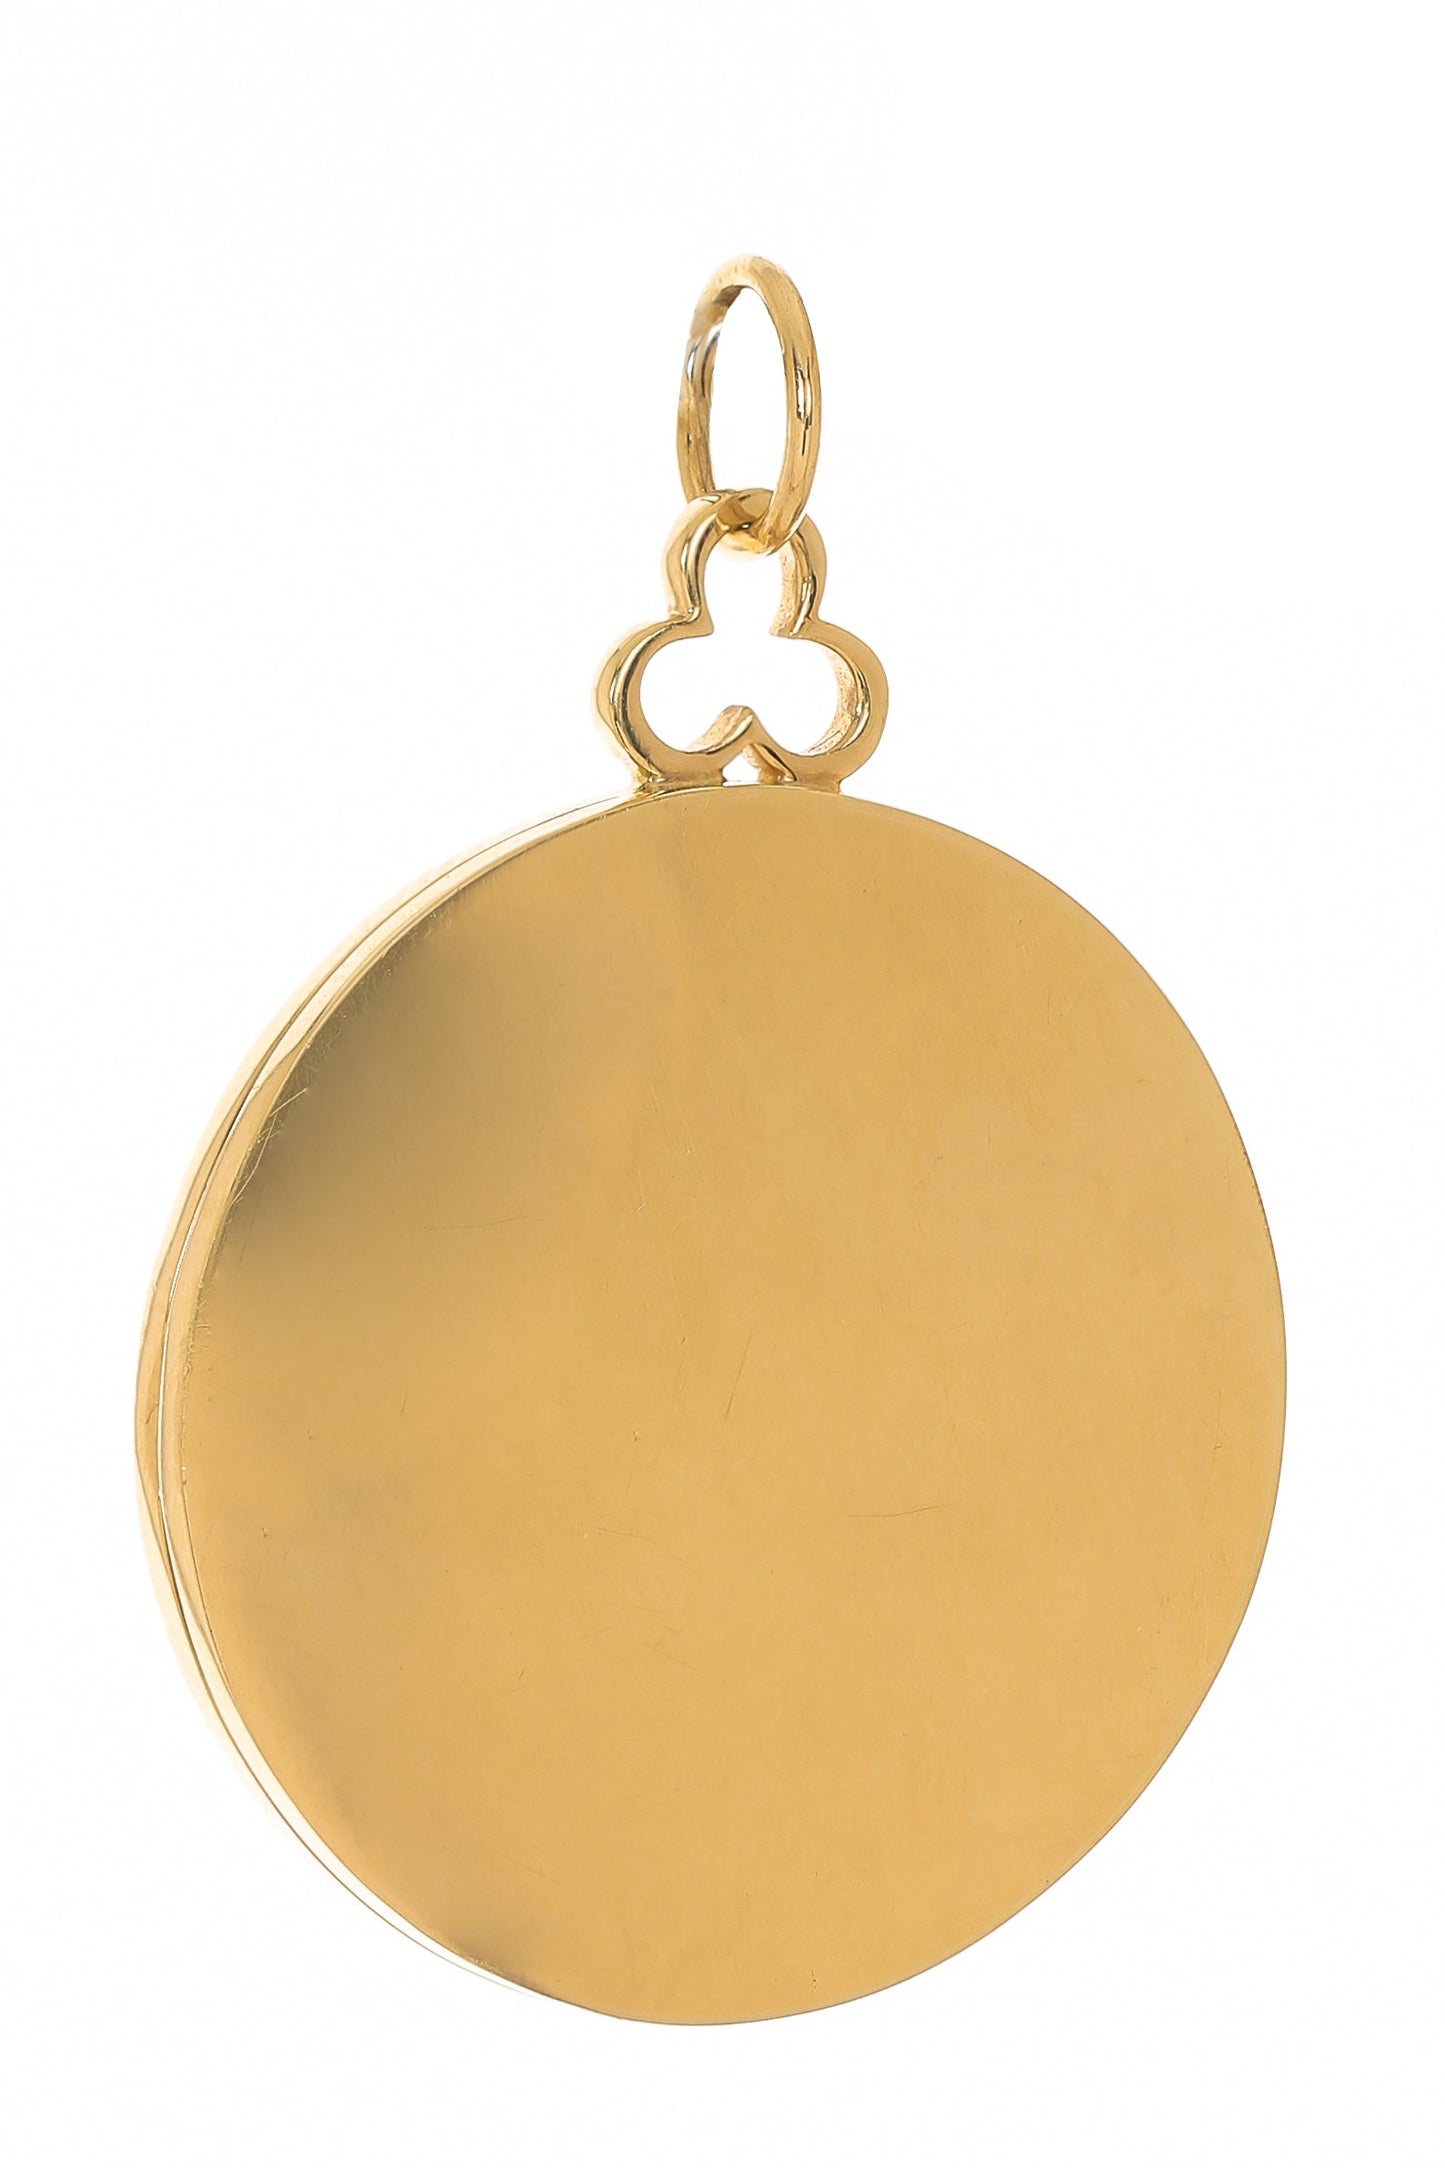 DEVON WOODHILL-Large Goddess Locket Necklace-YELLOW GOLD